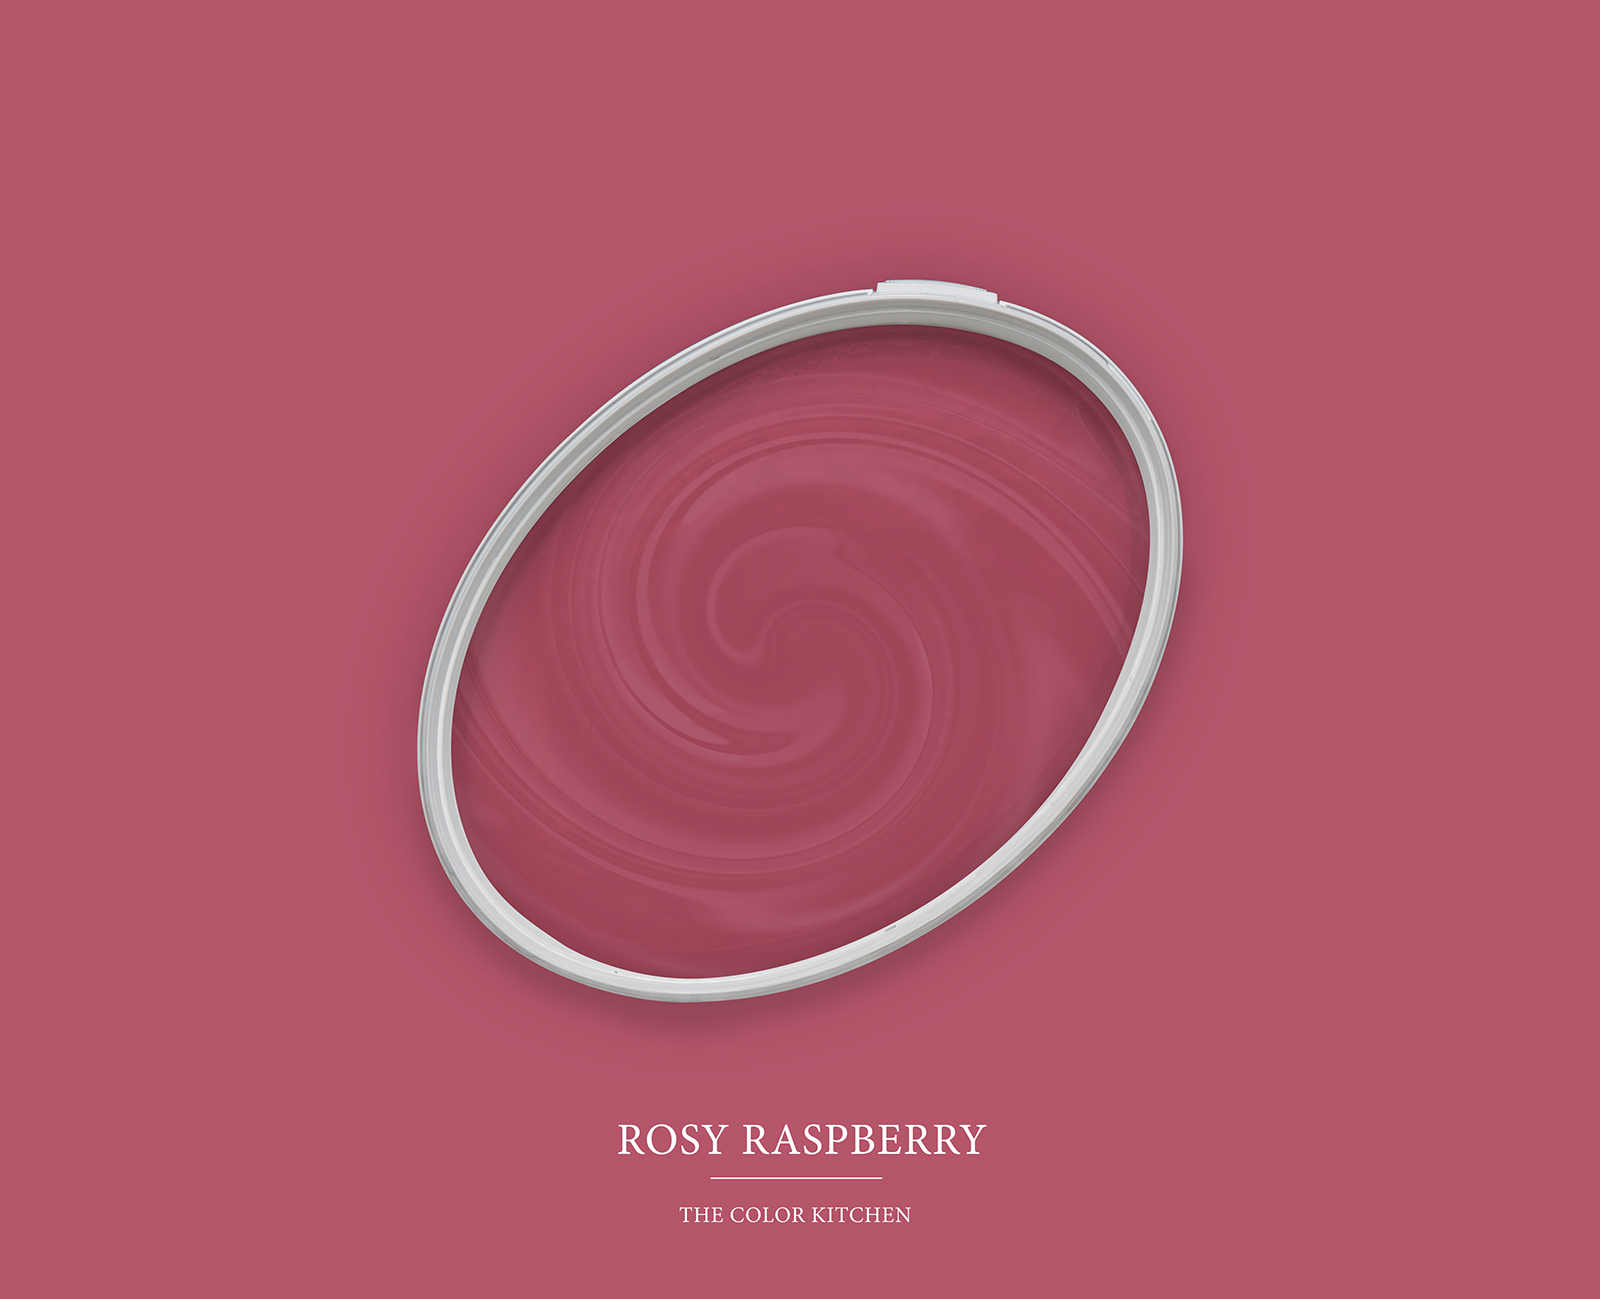         Wall Paint TCK7011 »Rosy Raspberry« in intensive dark pink – 2.5 litre
    